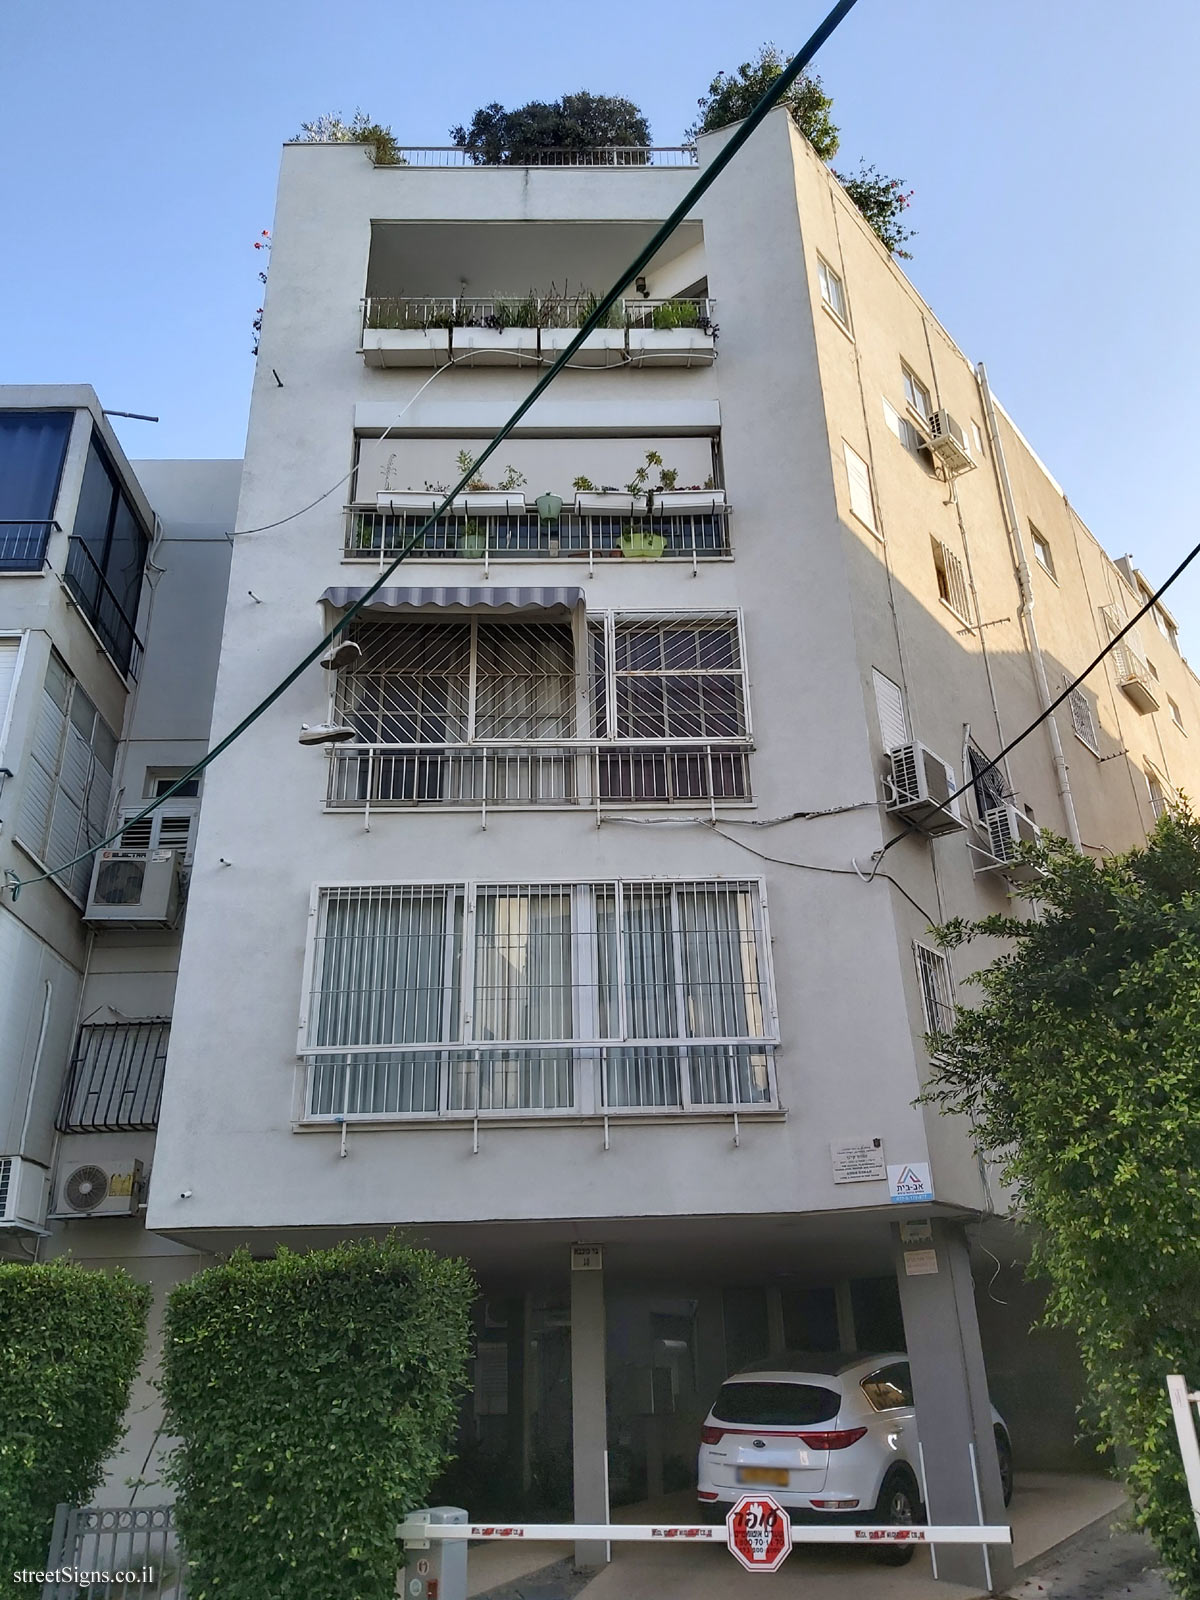 The house of Amos Kenan - Bar Kochva St 10, Tel Aviv-Yafo, Israel